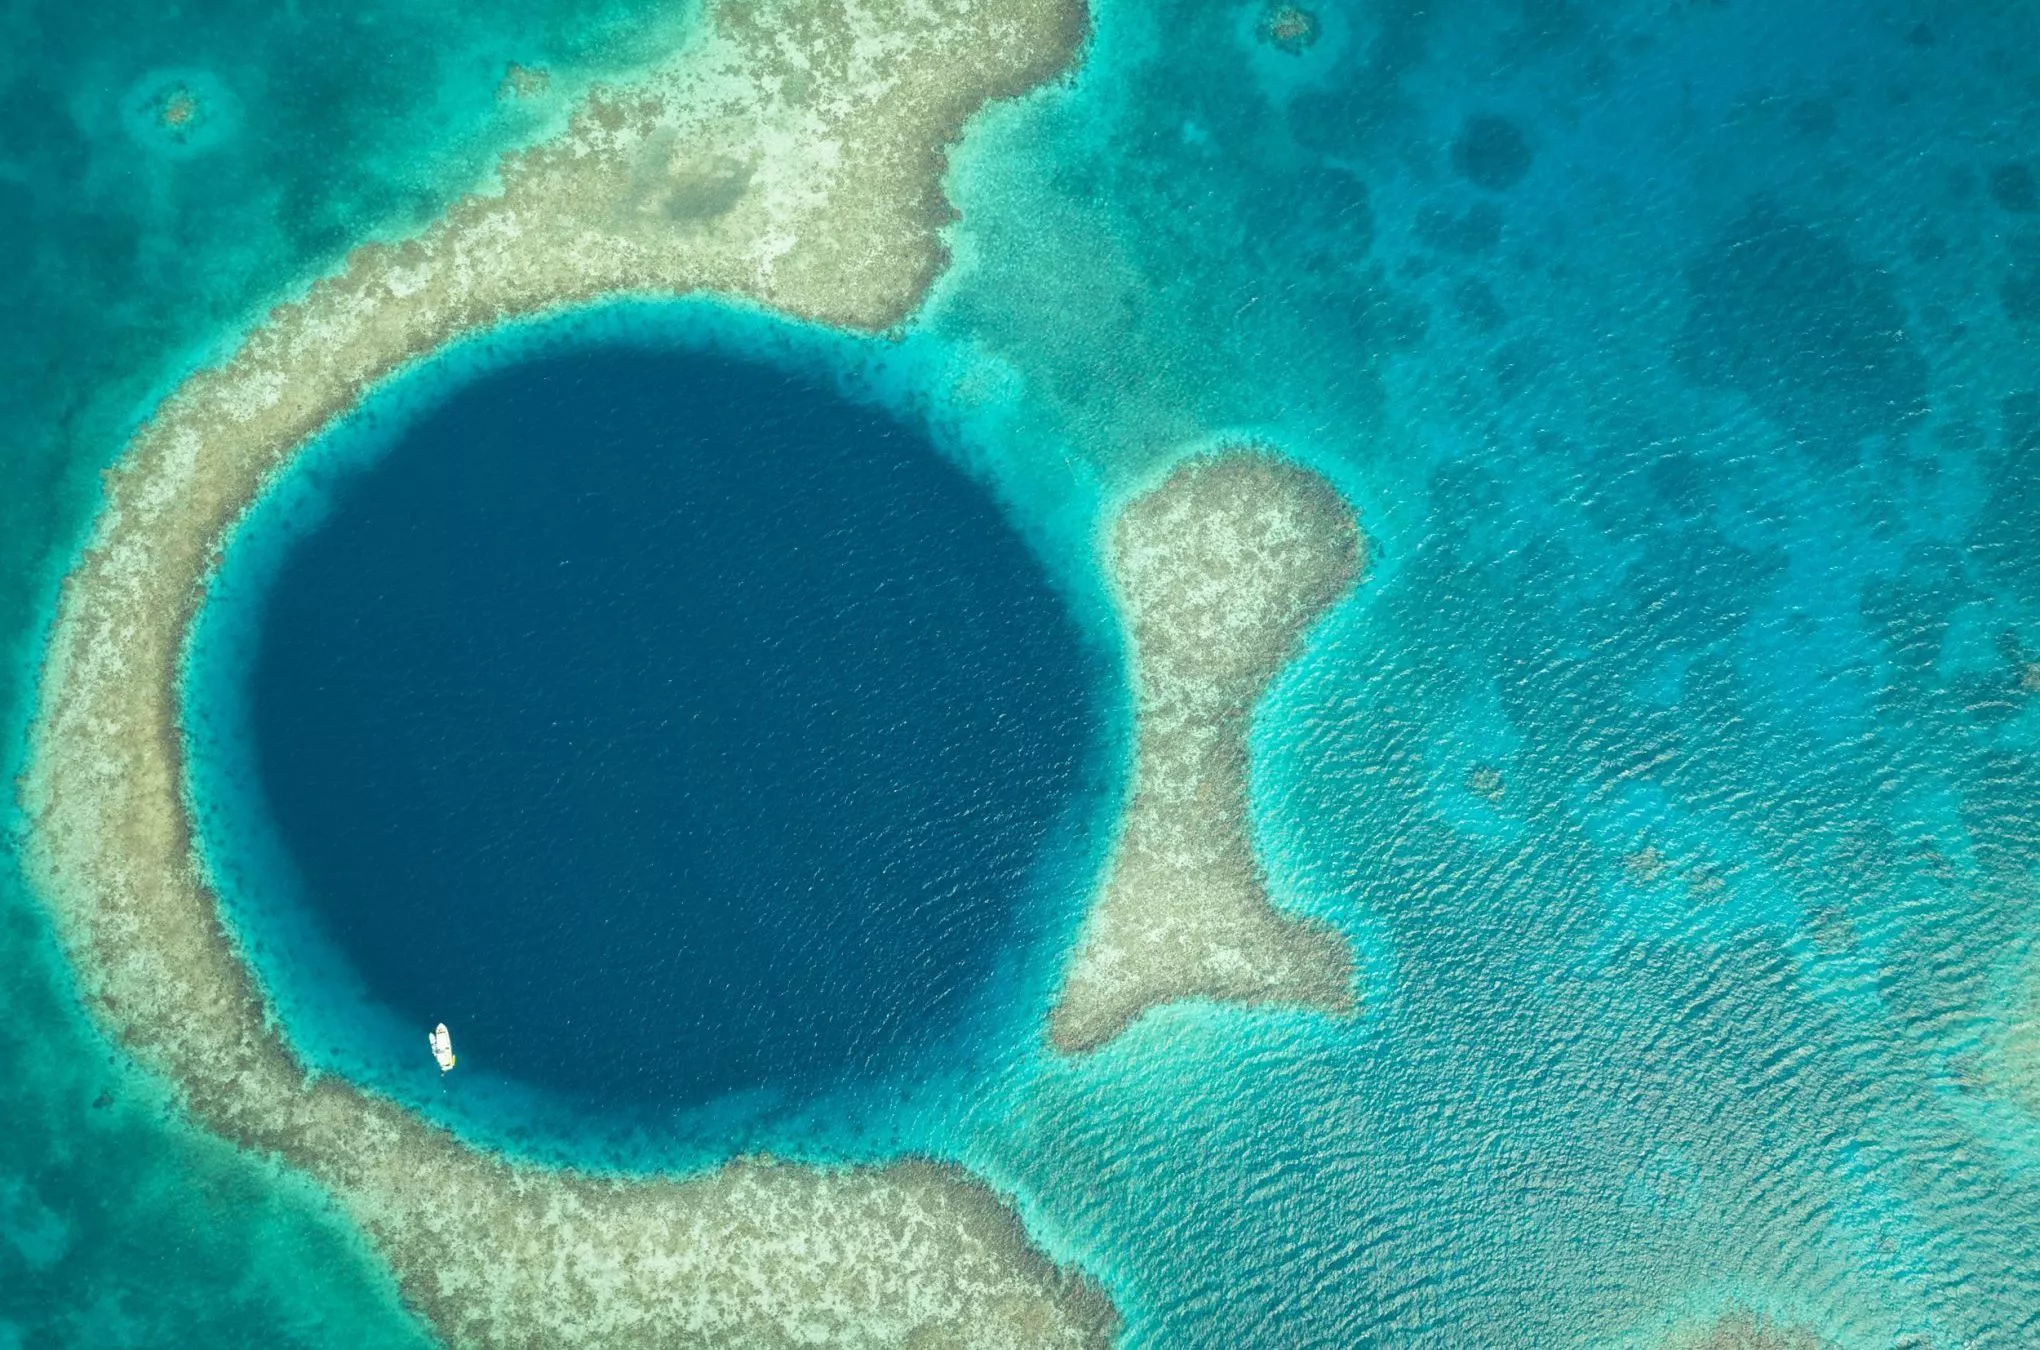 Great Blue Hole, Belize